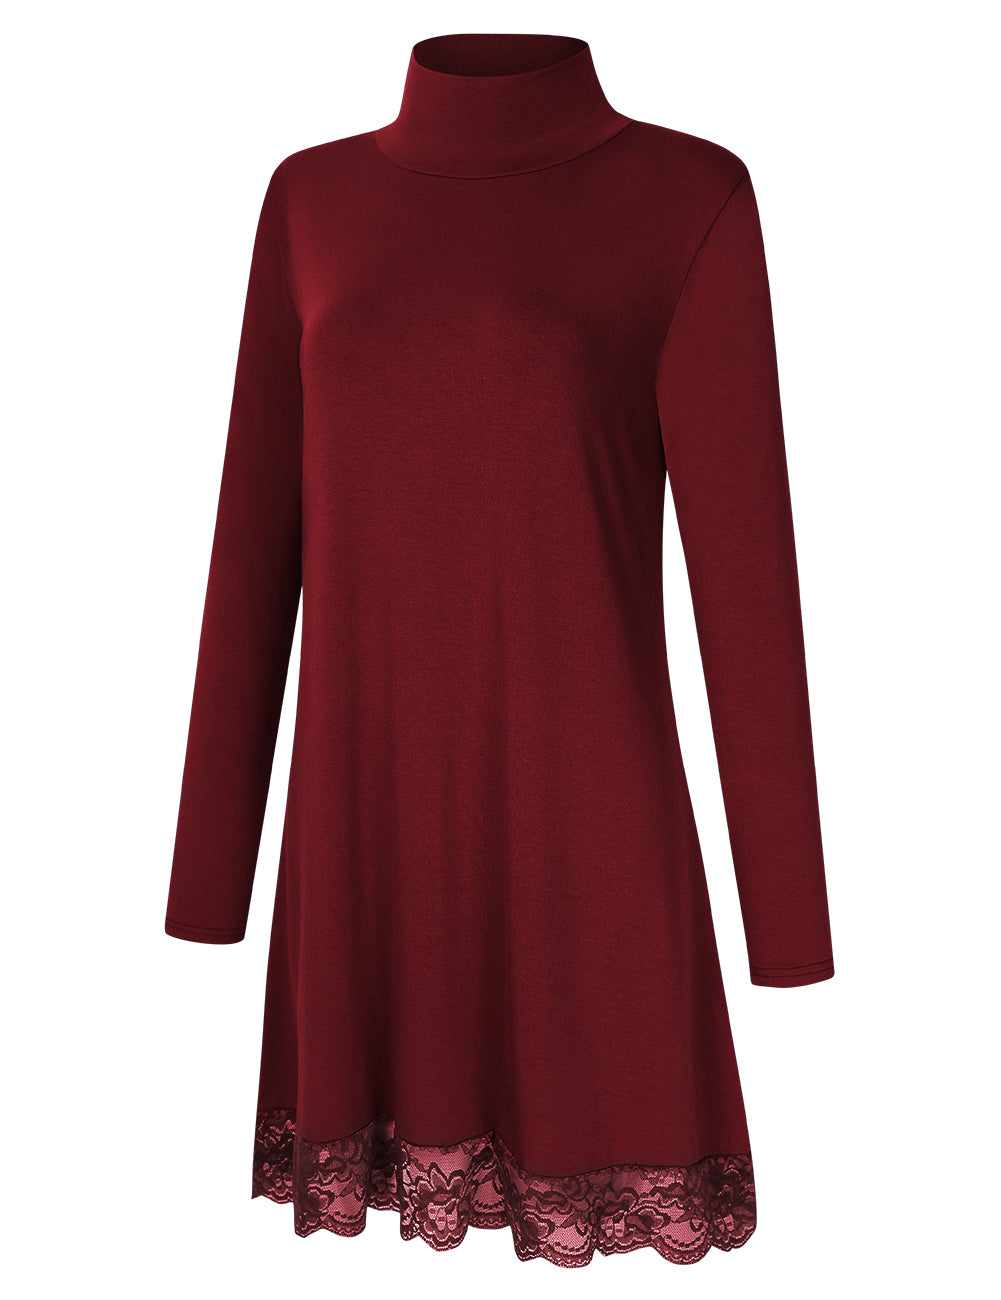 YESFASHION Women's Long Sleeve Knit Turtleneck Lace Cotton Casual Dress